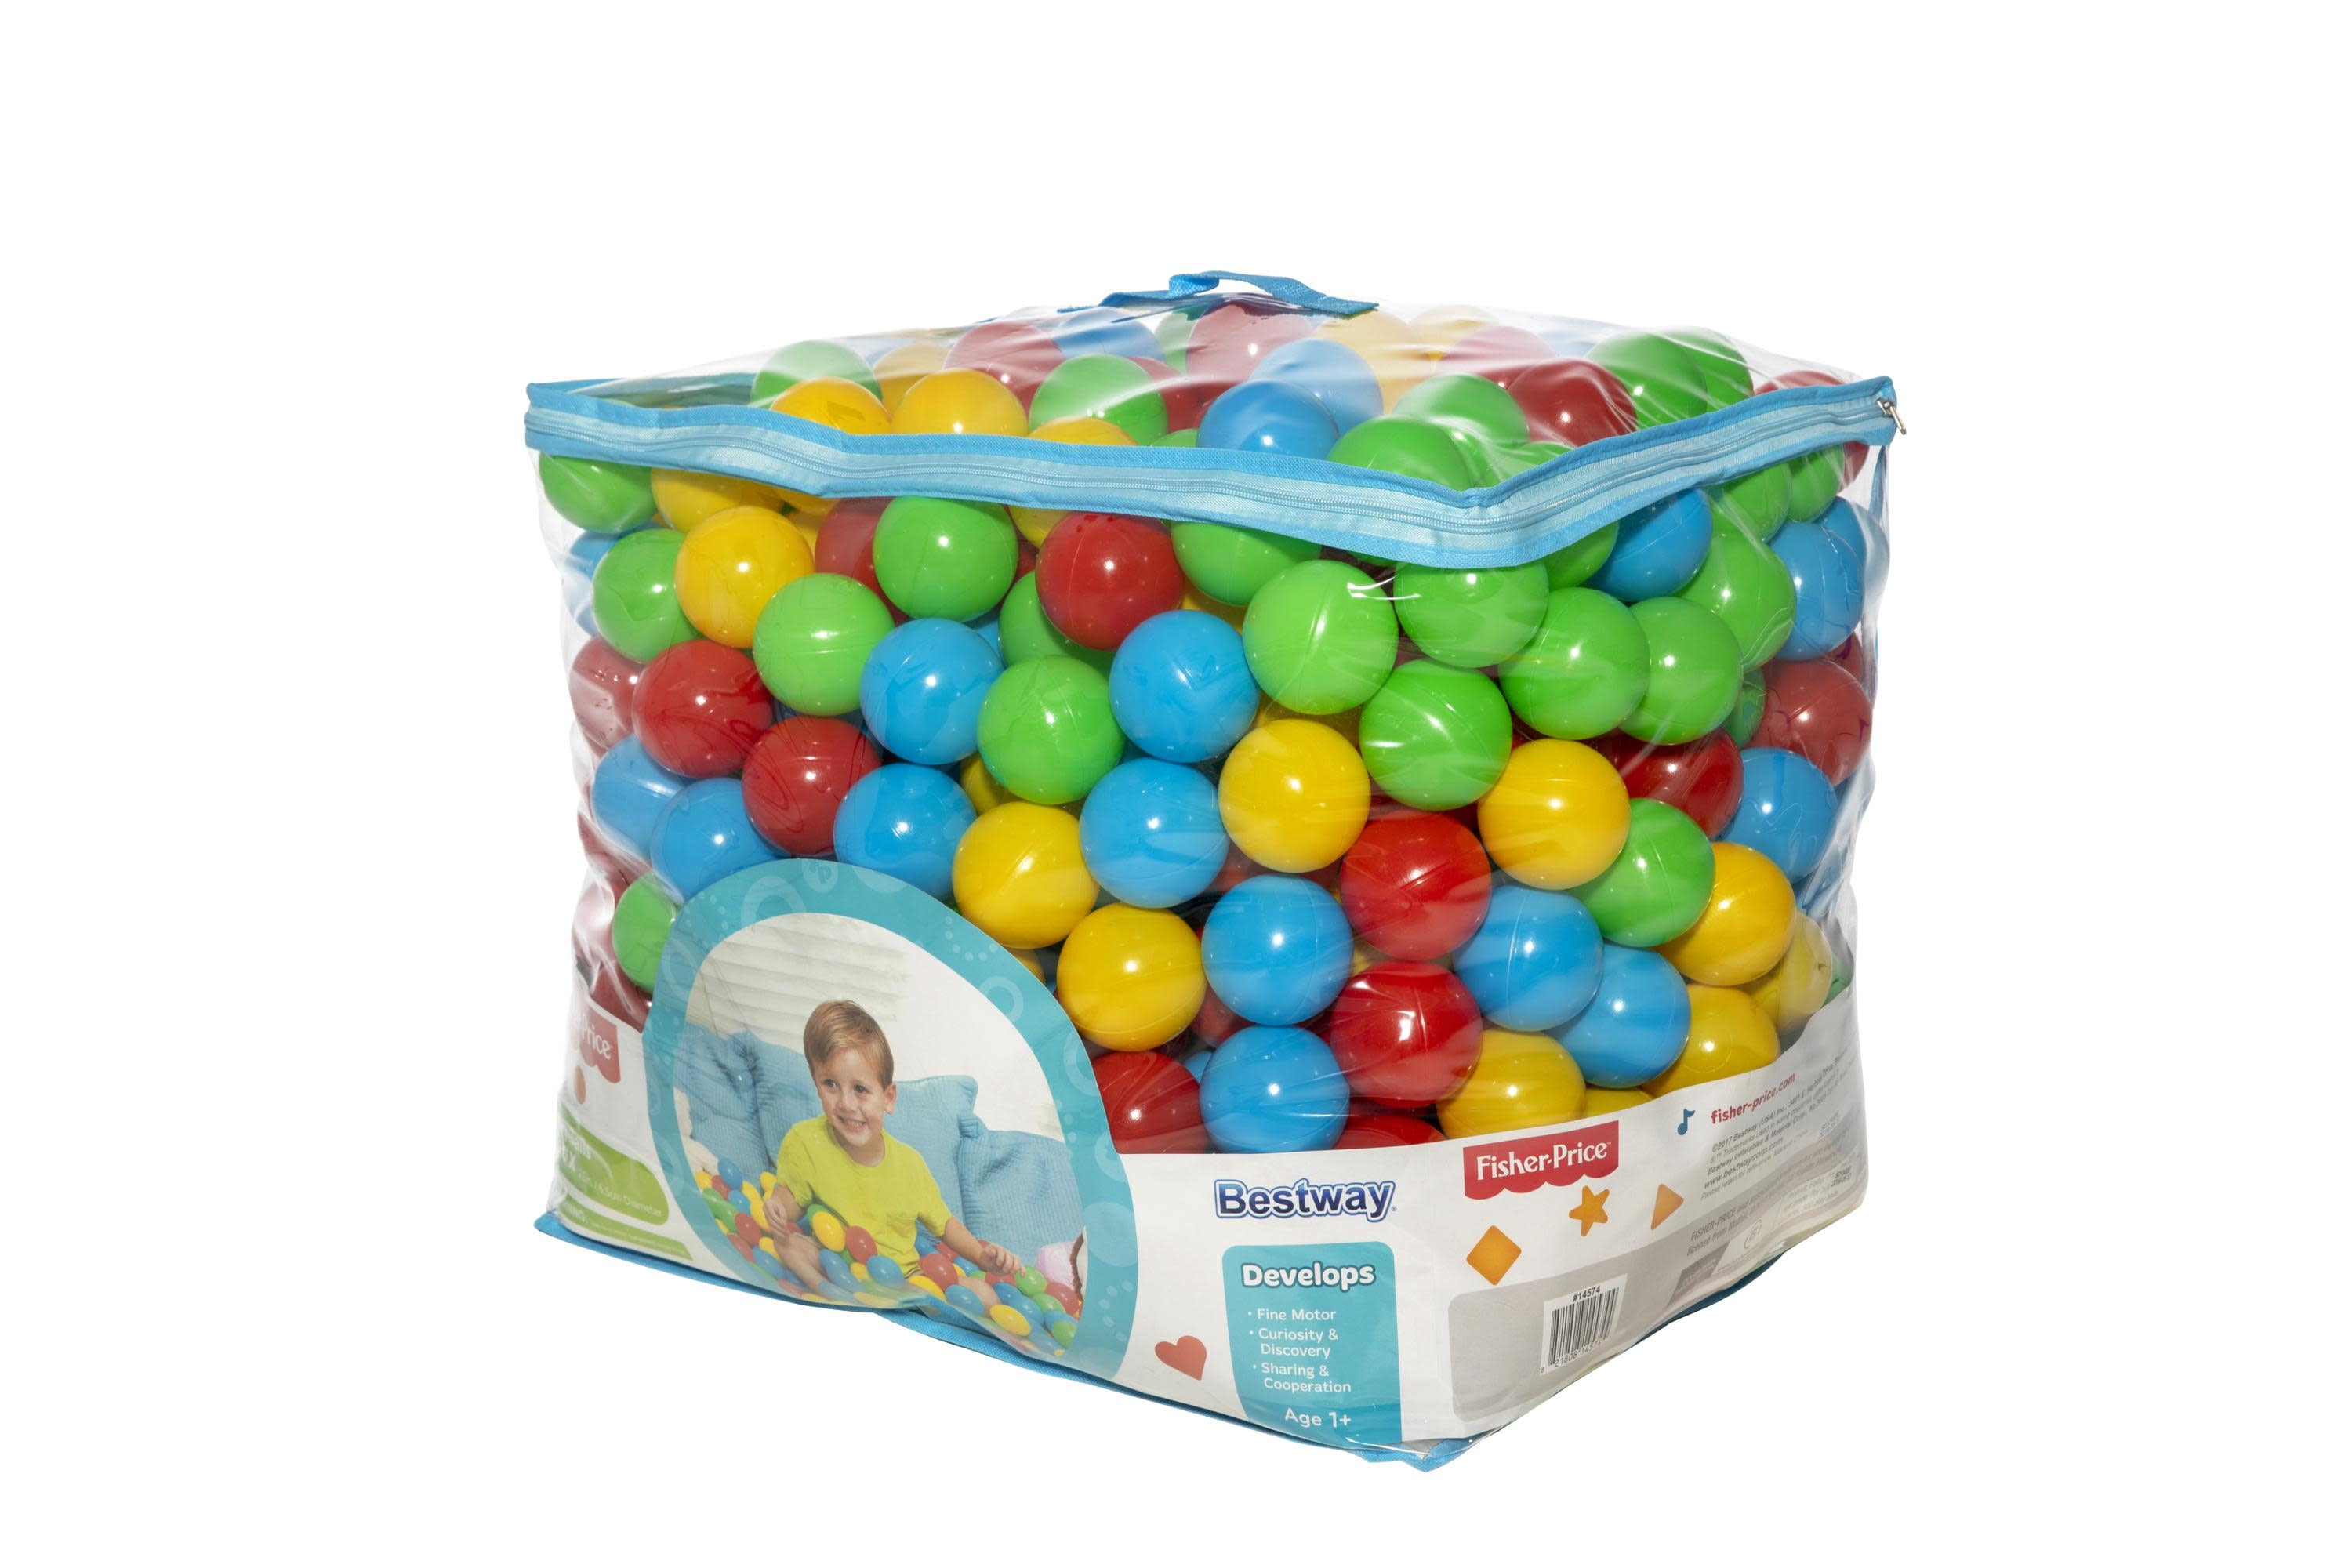 Multi-Purpose Kid Ball Pit Balls Storage Net Bag Toys For 200 balls// Organ O2H1 